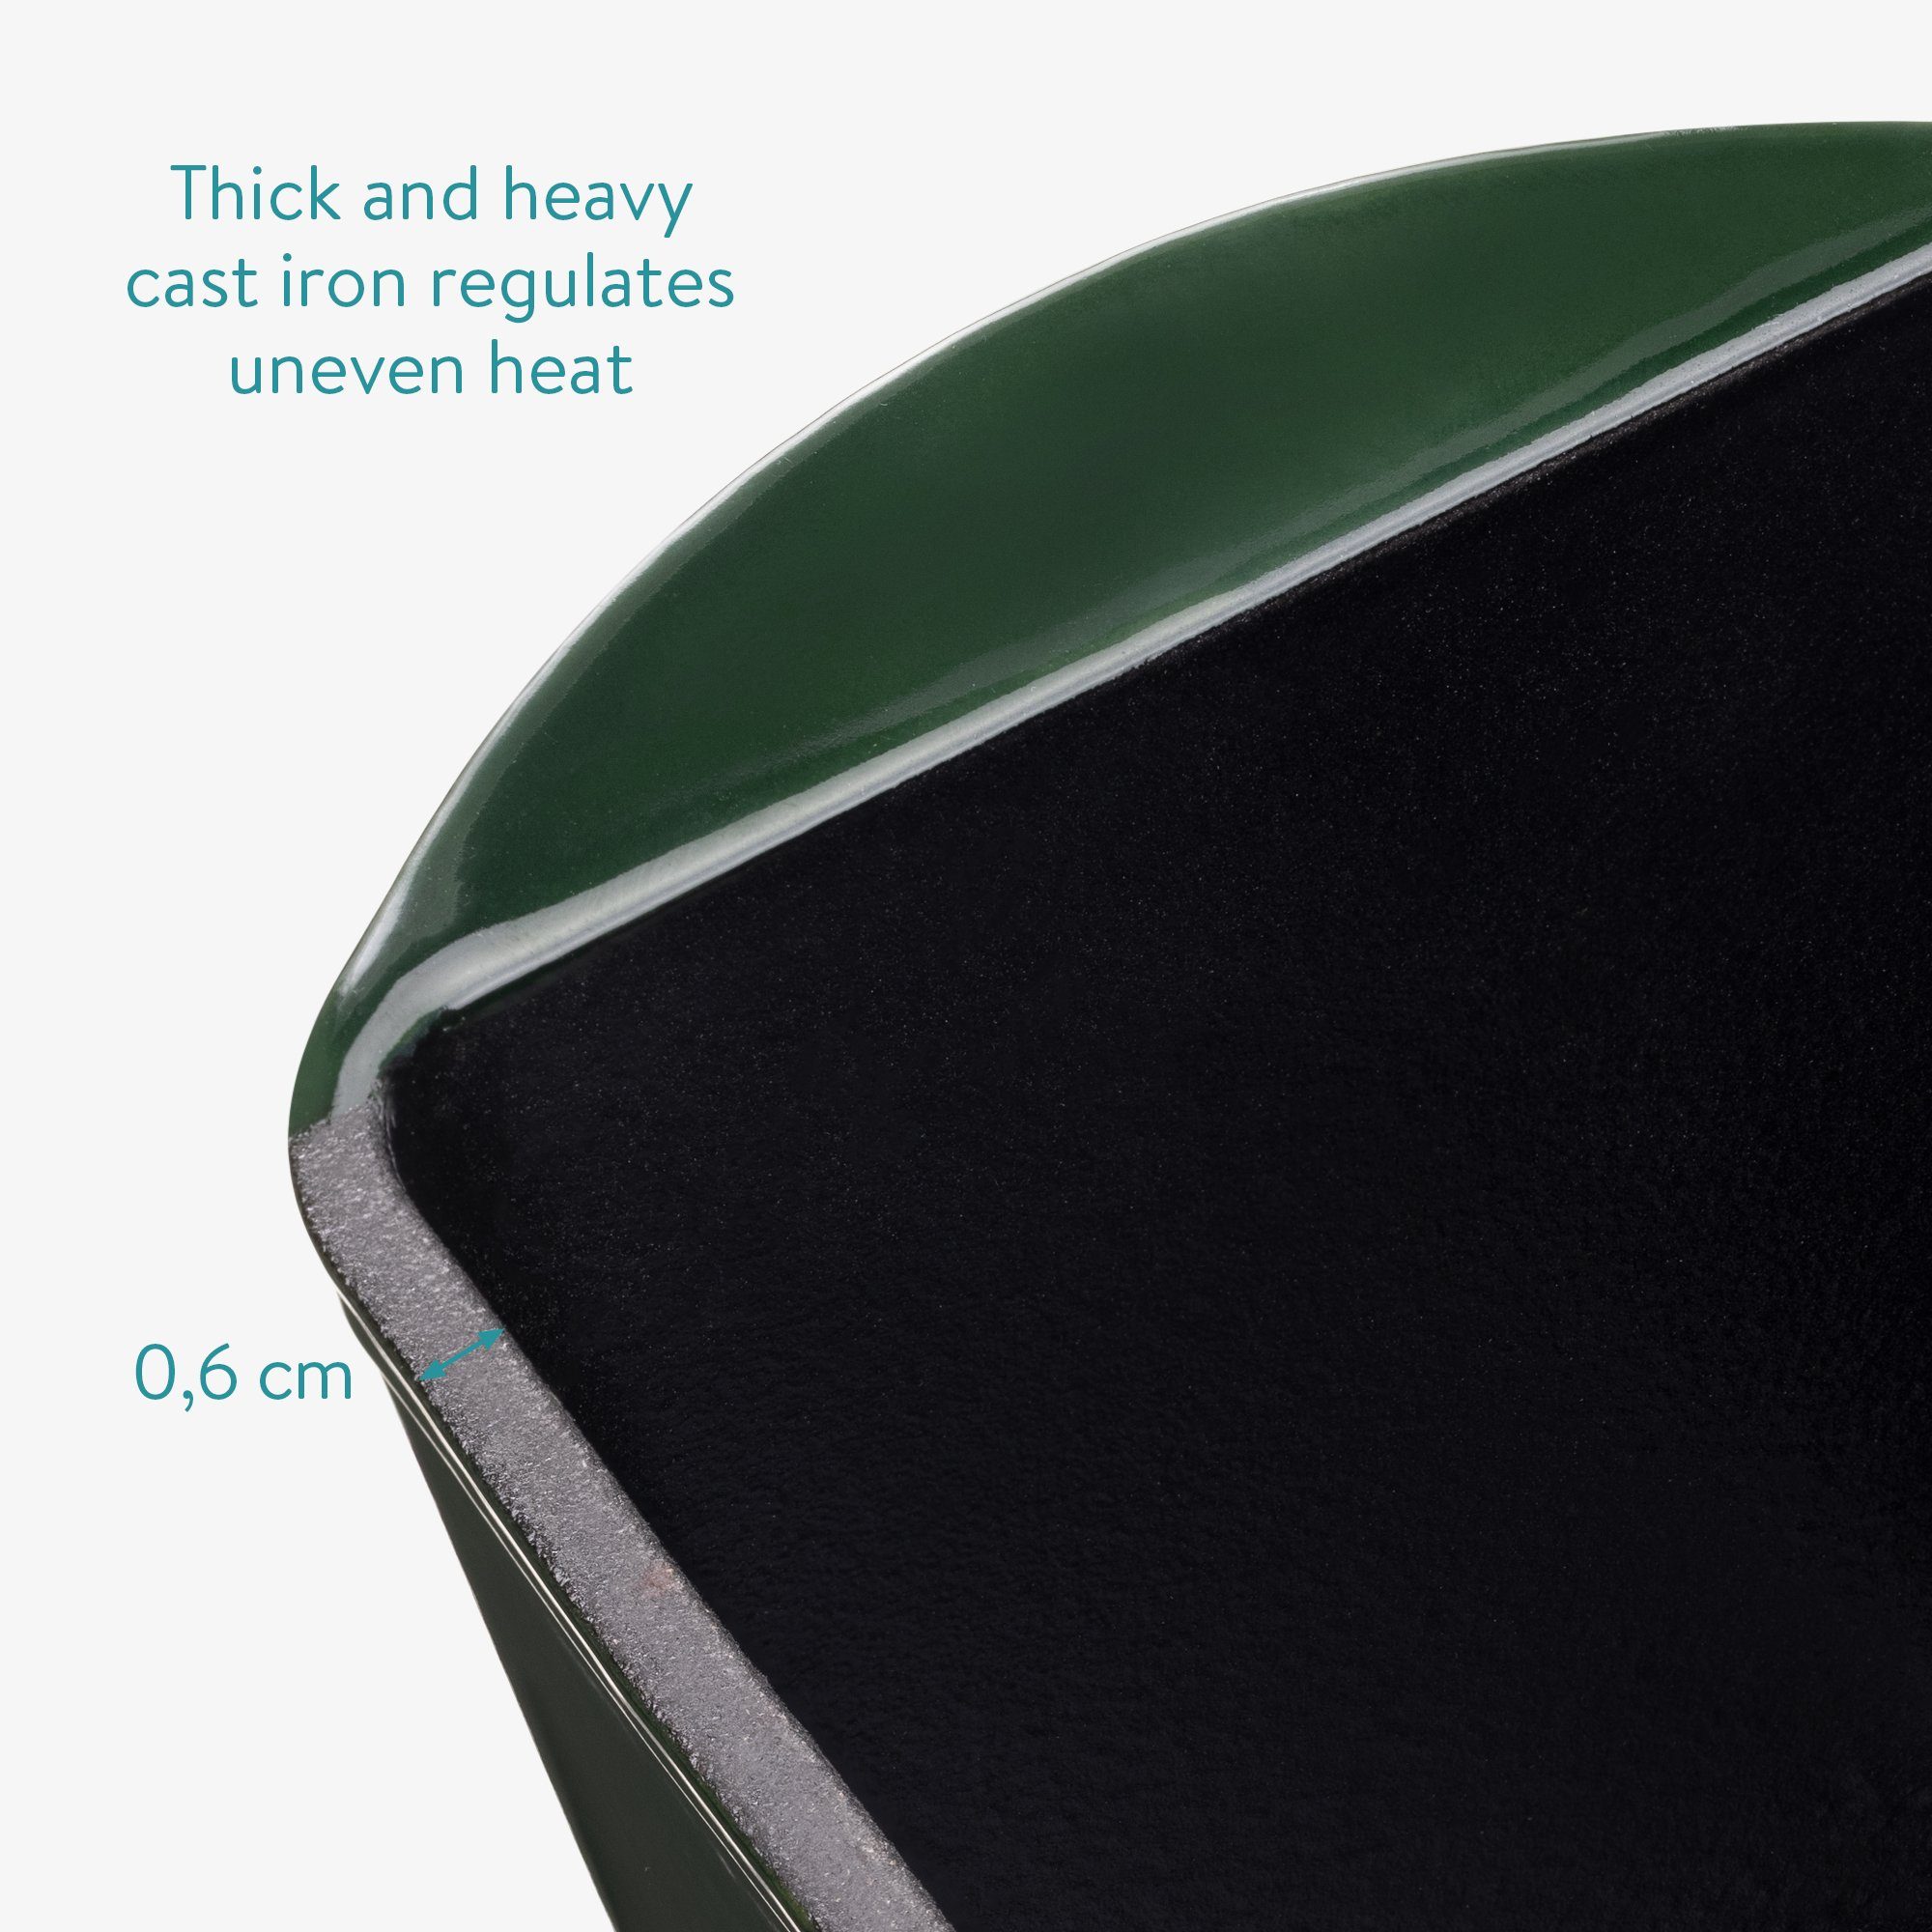 Navaris Brotbackform - Dutch Brotbackform Oven Deckel mit Gusseisen 34x13,5x17cm - - Dunkelgrün grün